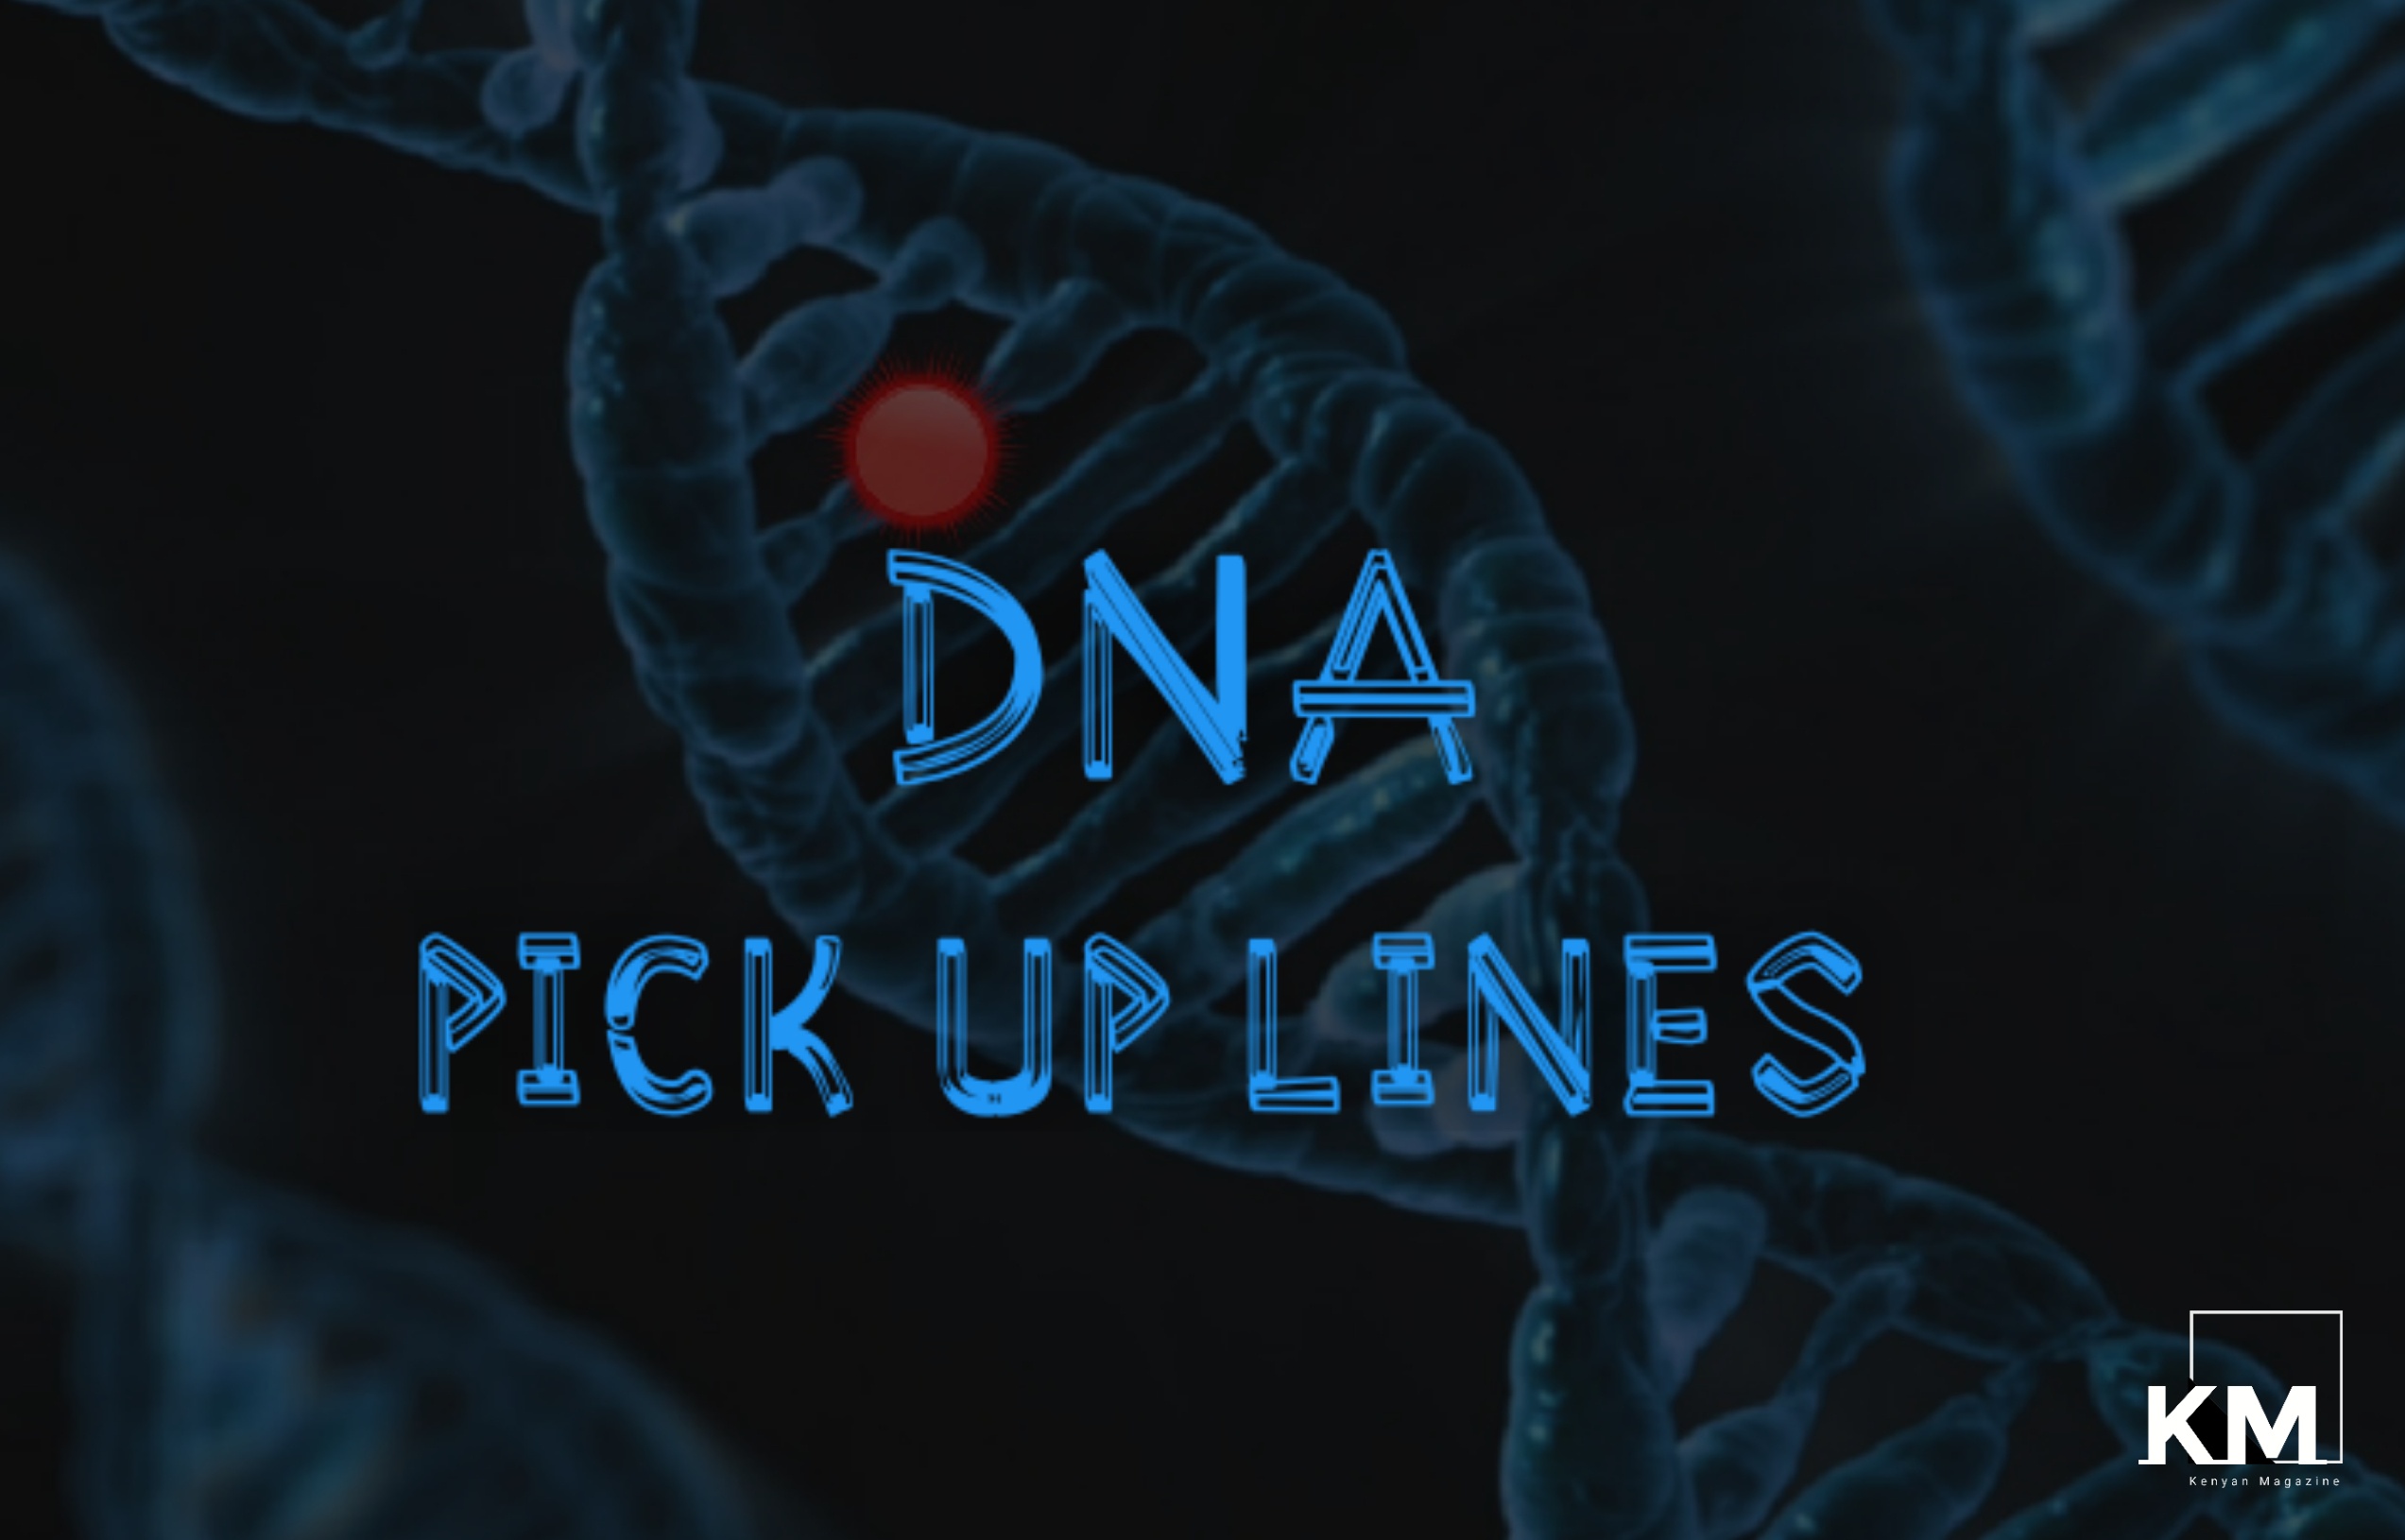 DNA pick up lines